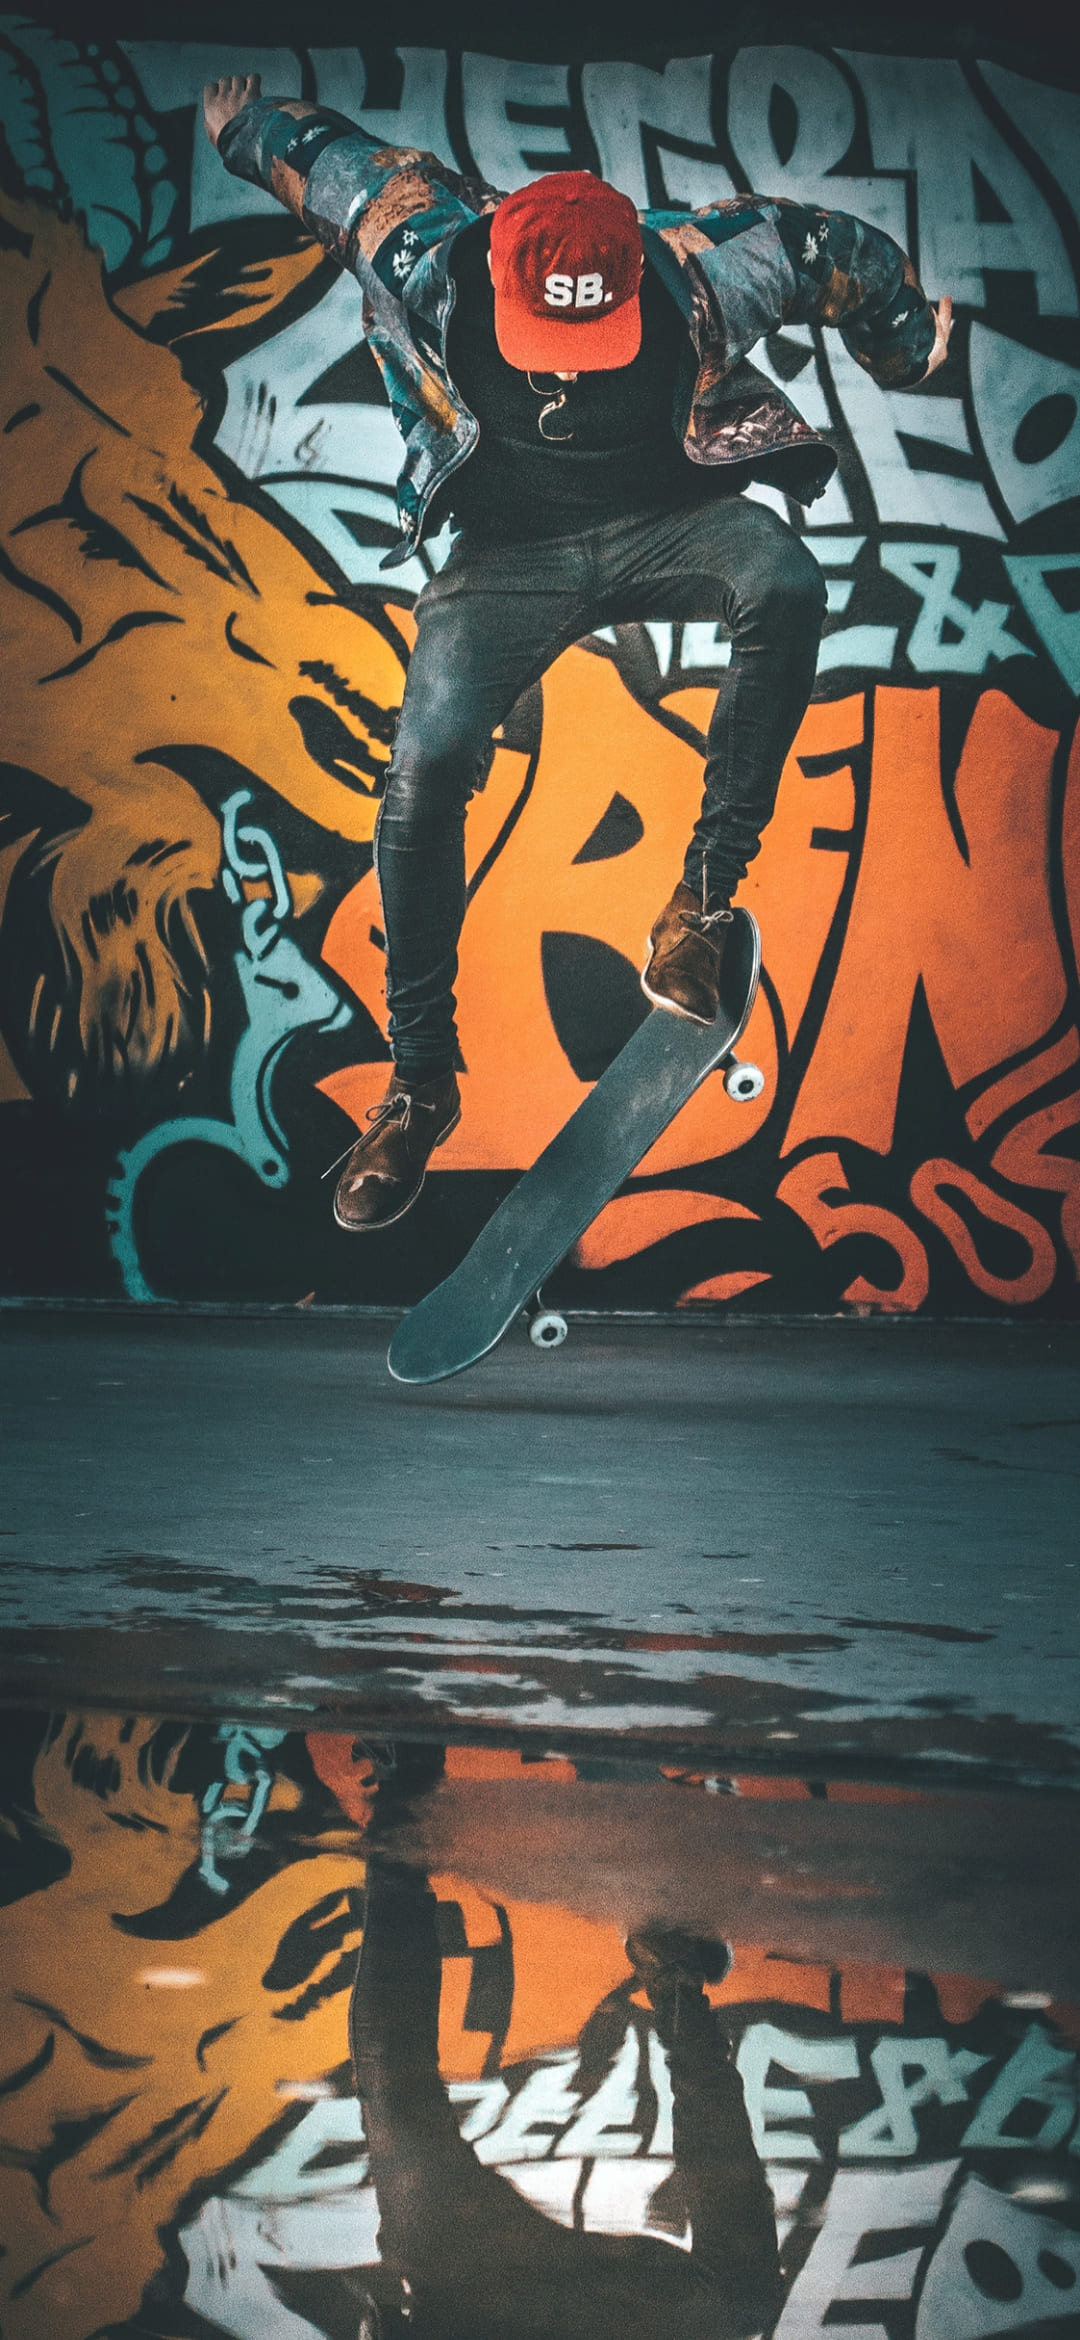 Skateboard Wallpapers - Top 65 Best